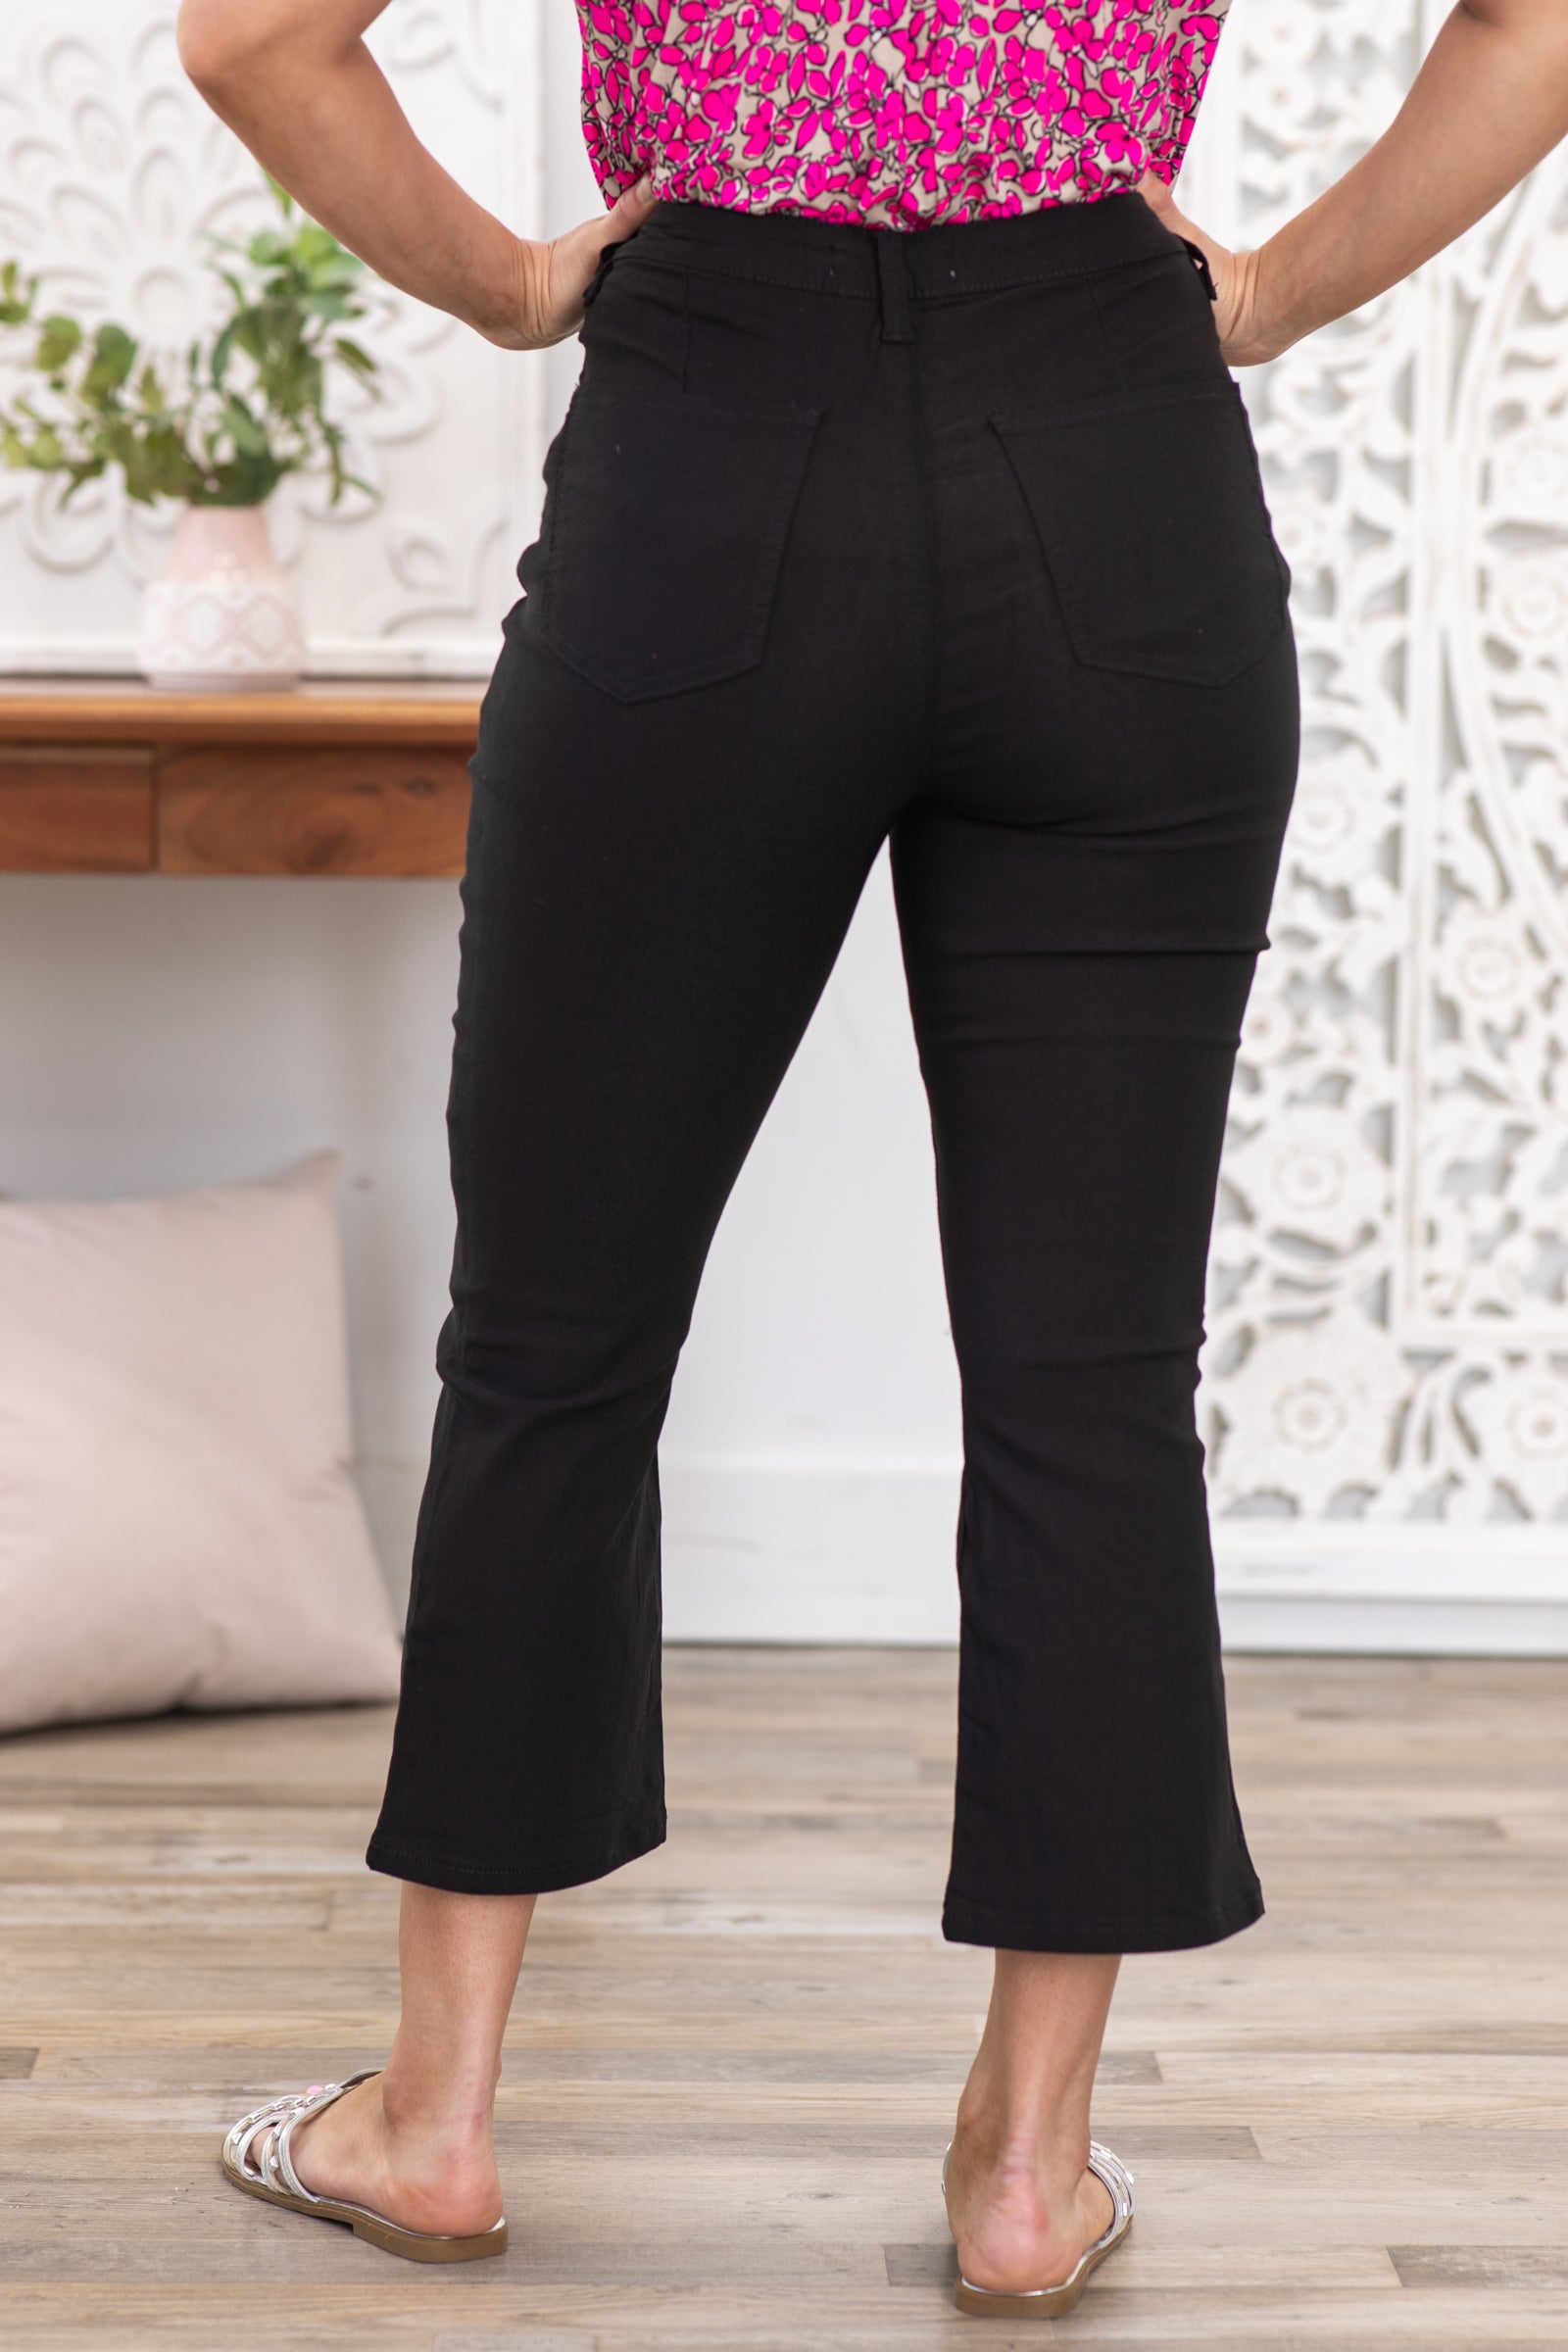 Black Flare Pants - Vegan Leather Pants - Flared Cropped Pants - Lulus